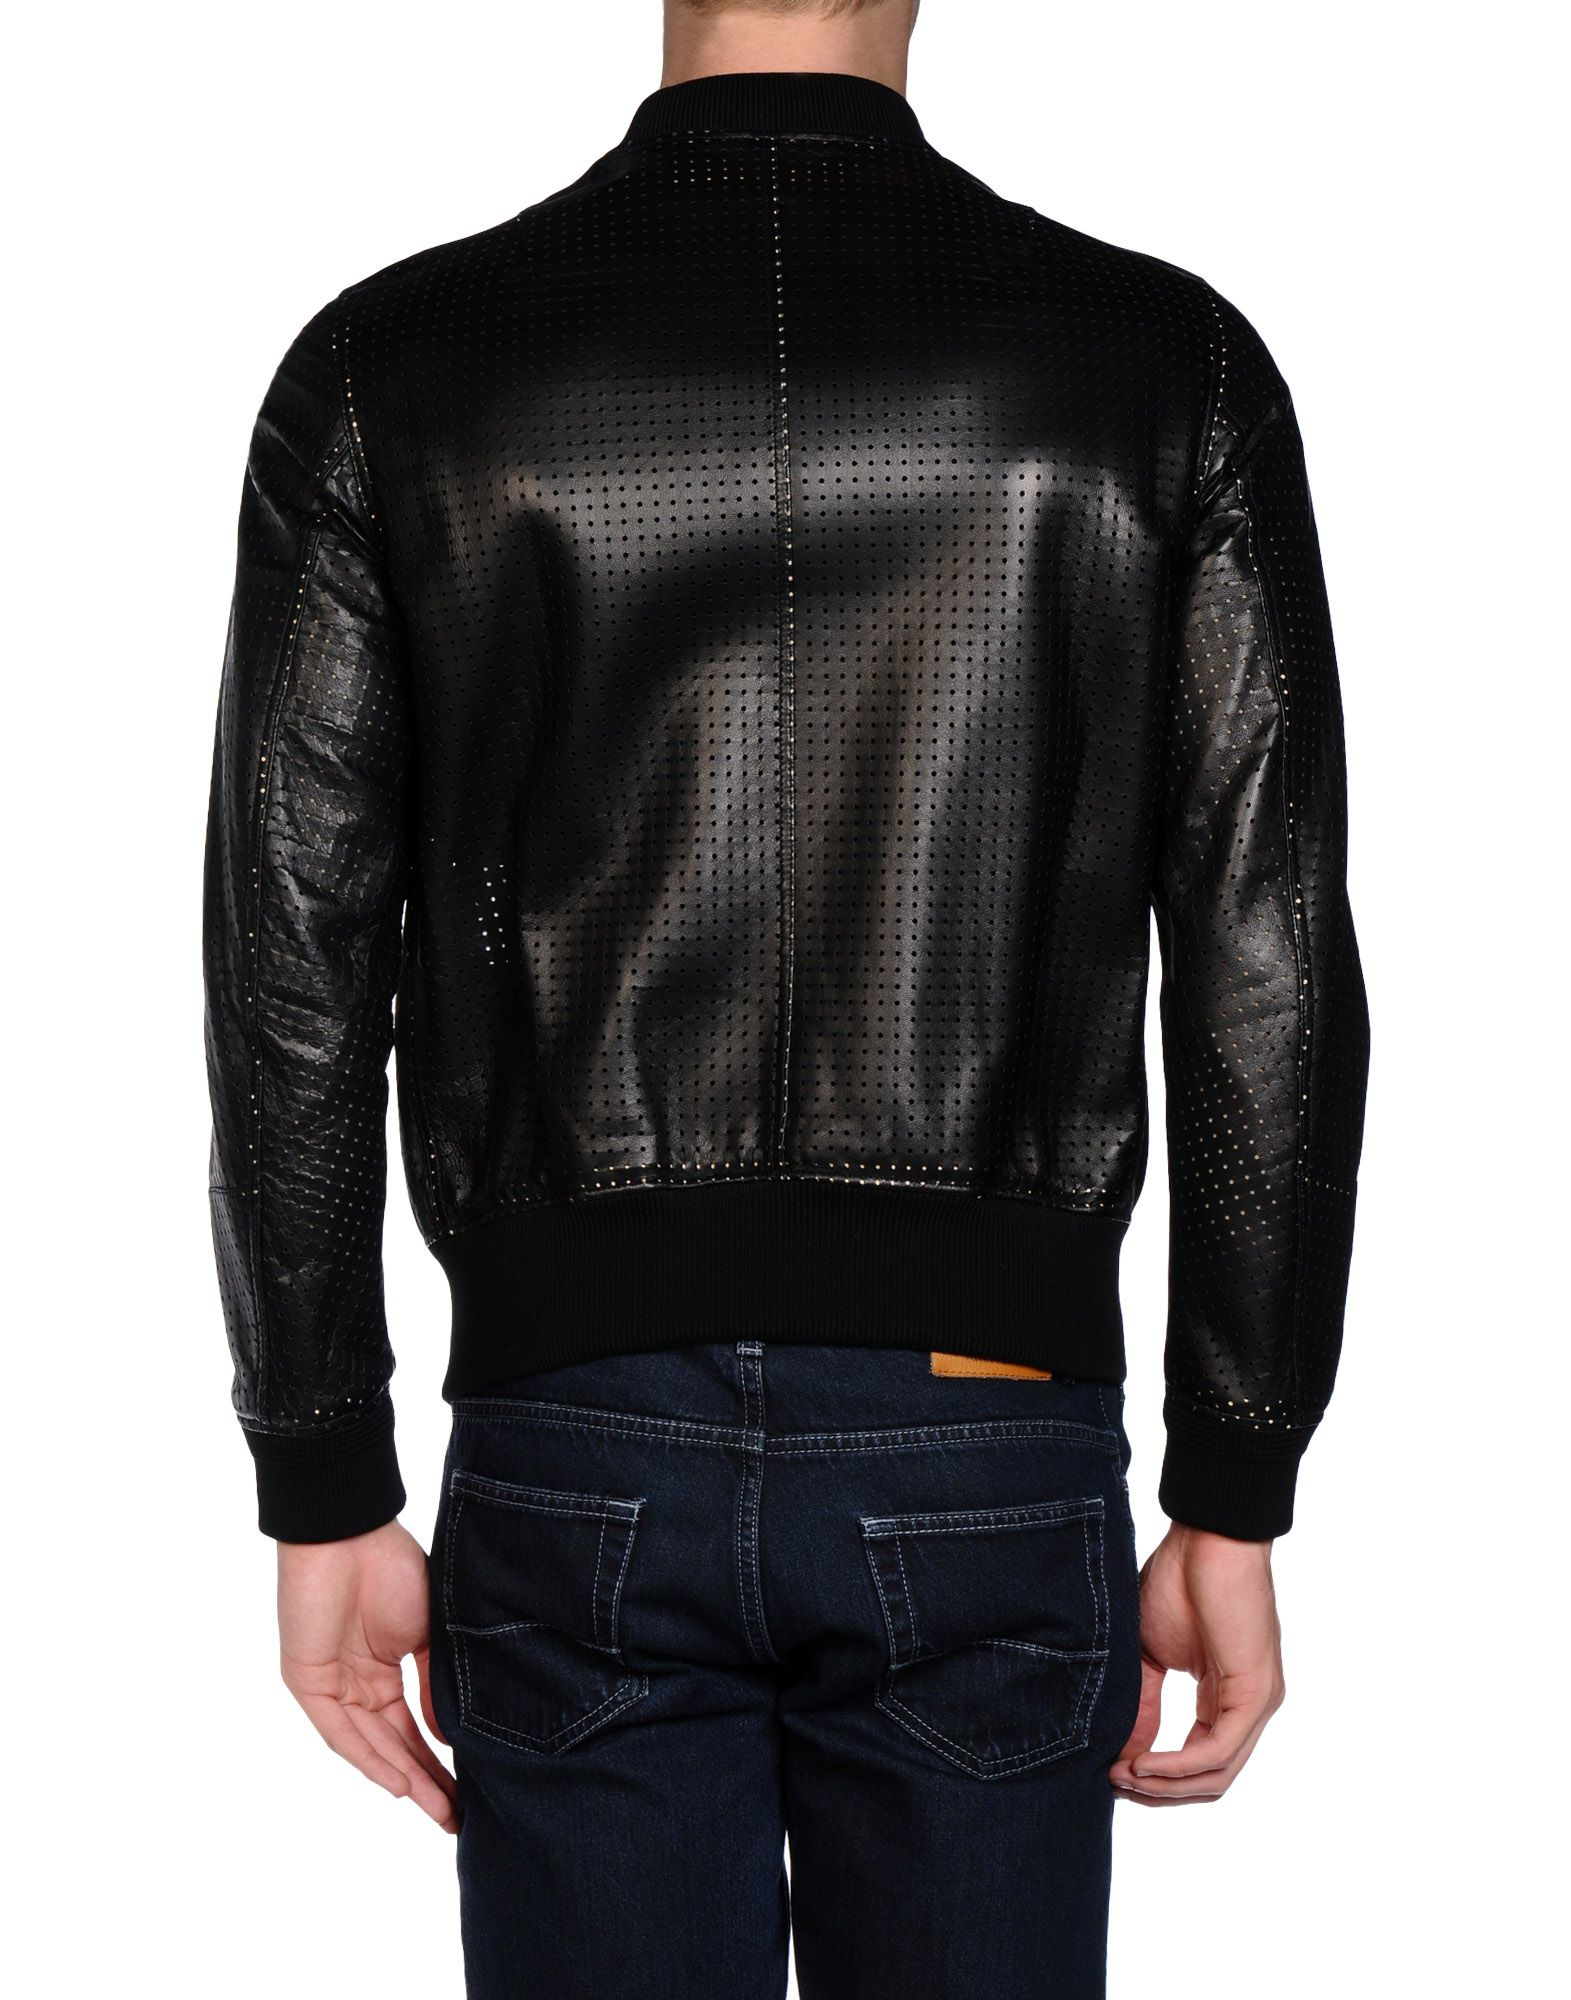 Alexander McQueen Leather Jacket in Black for Men - Lyst